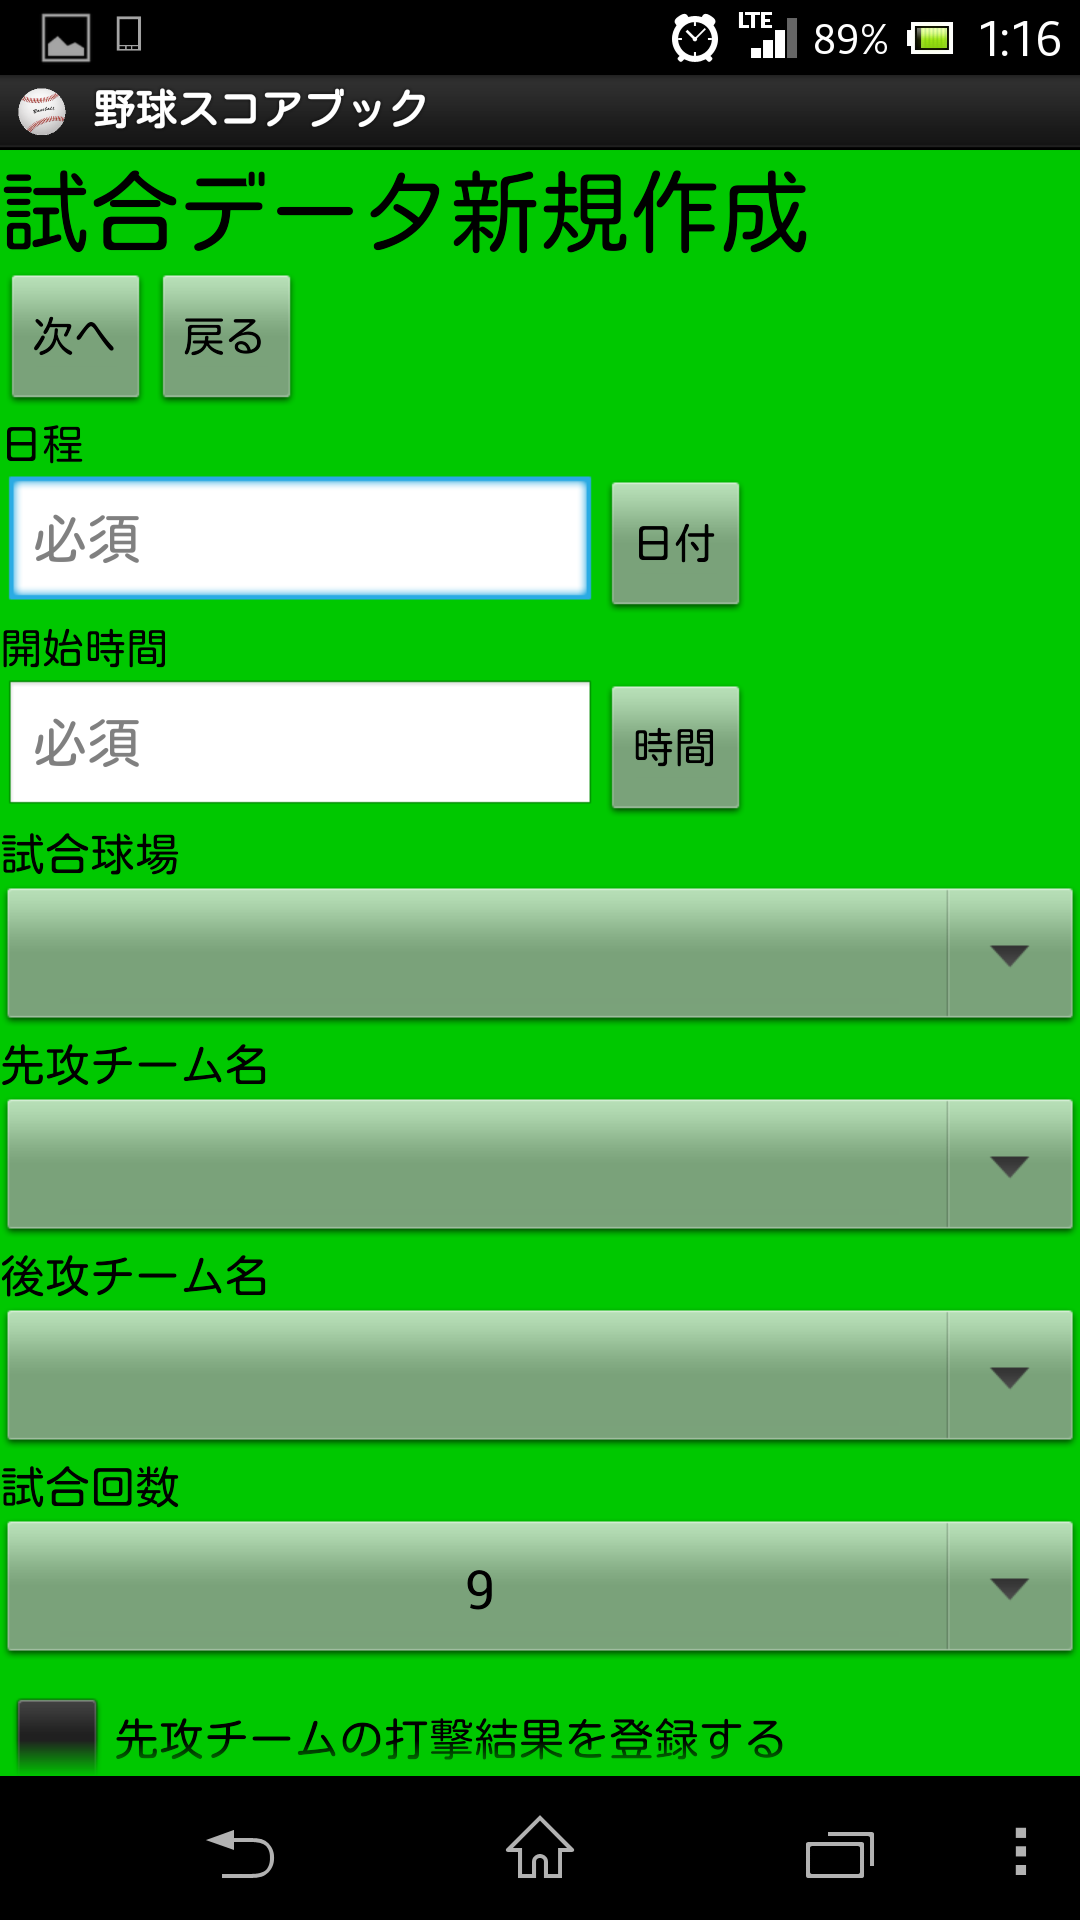 Android application BaseBall Score Book screenshort